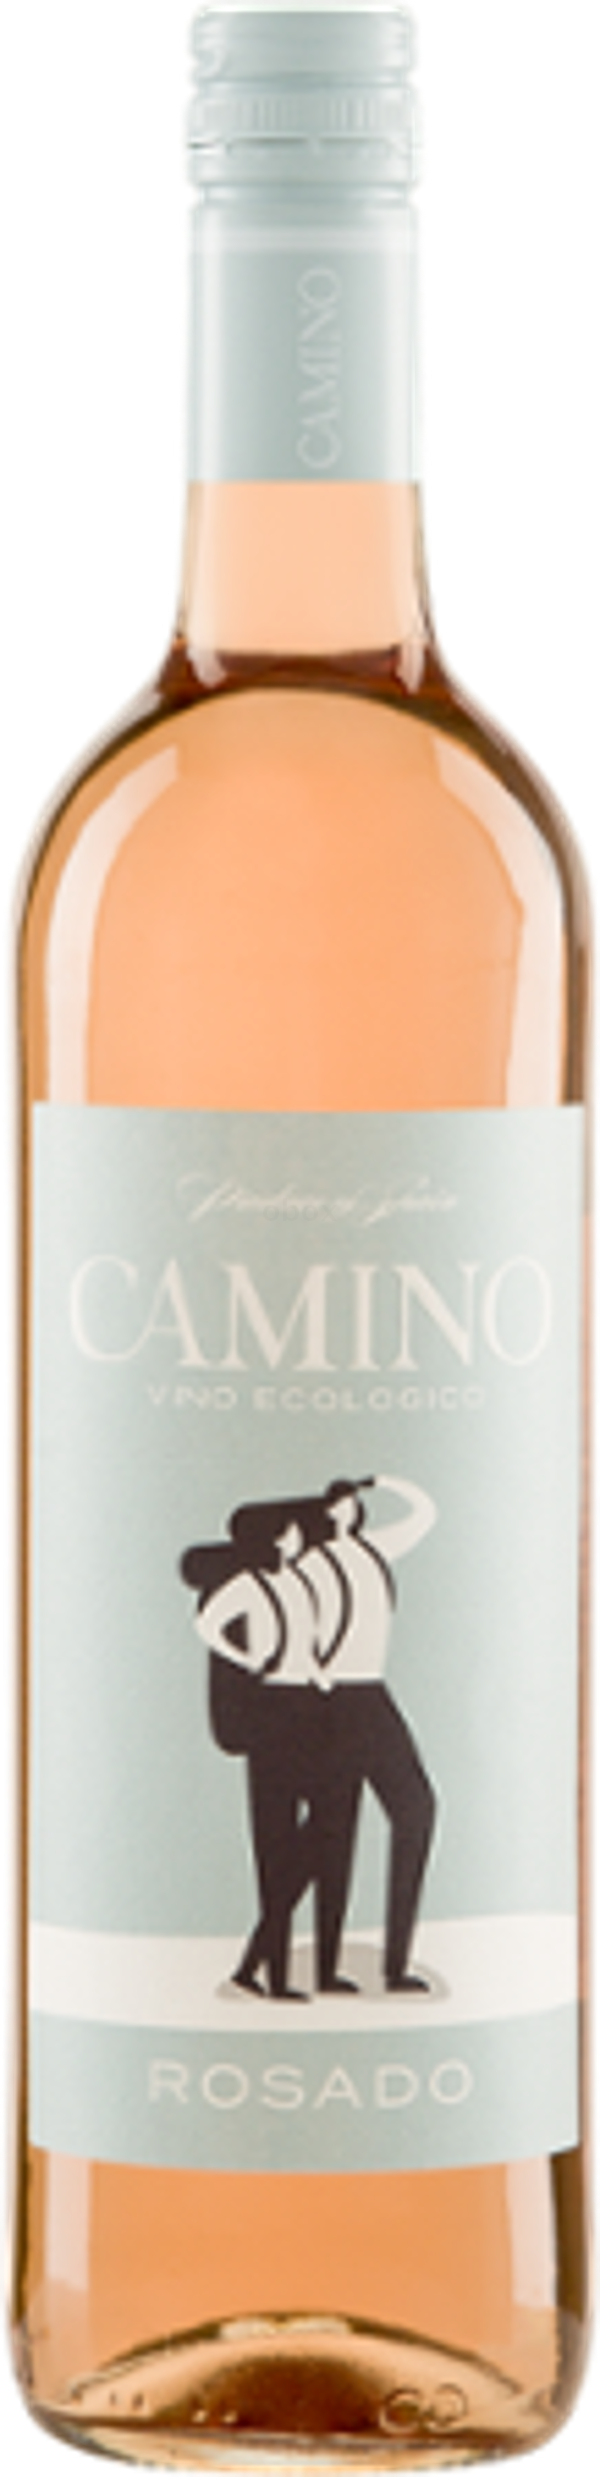 Produktfoto zu Camino rosé